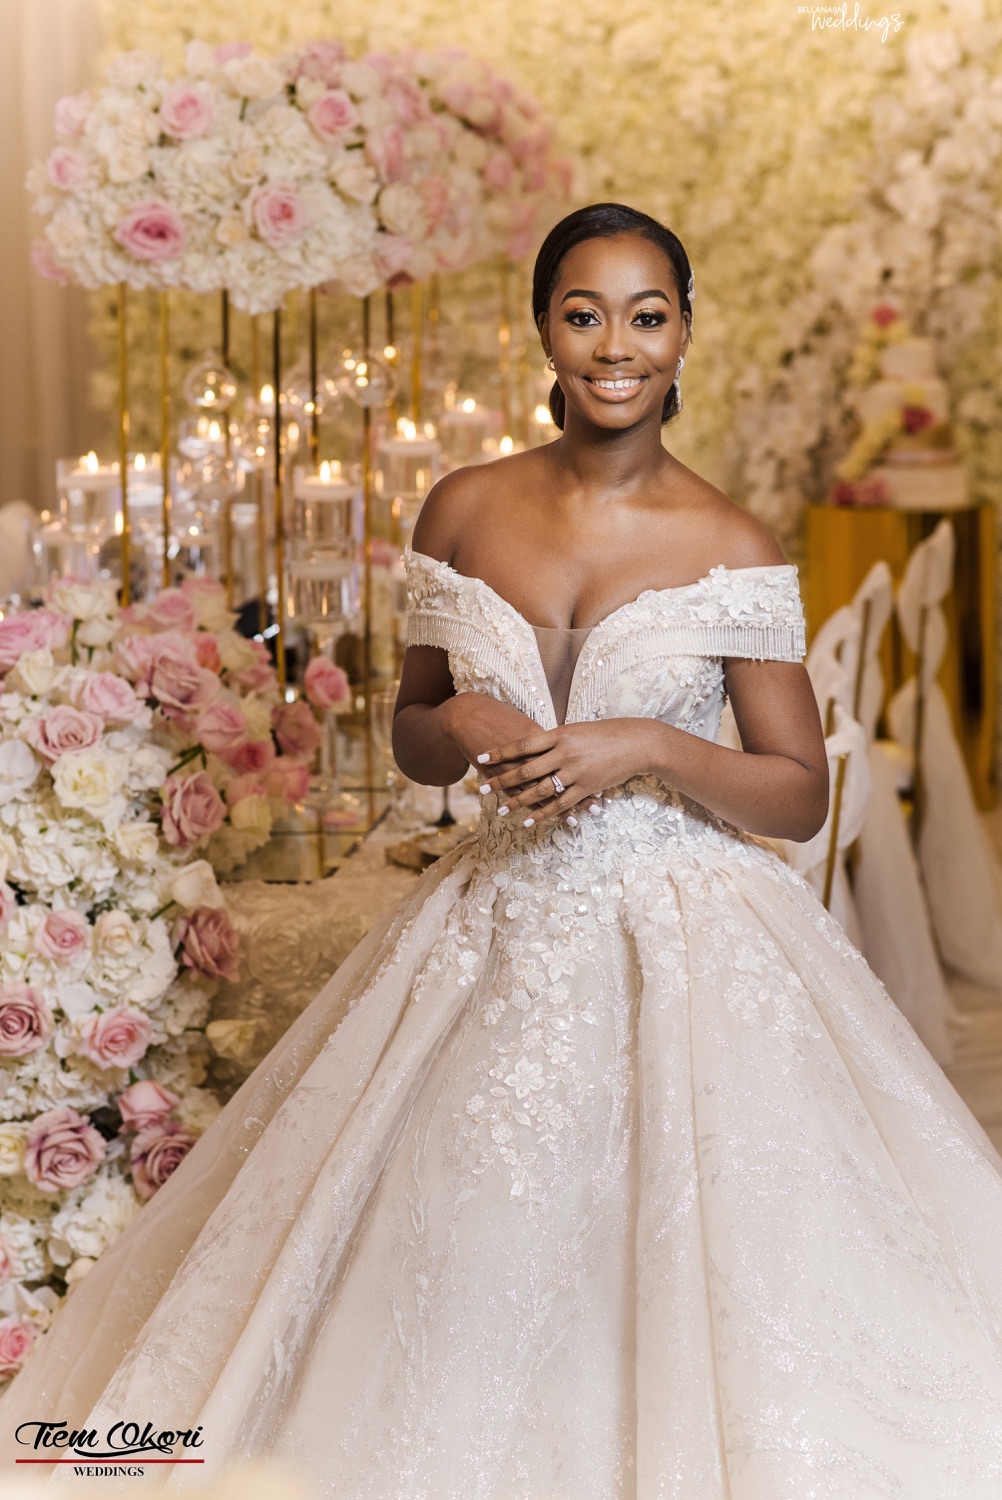 Blush, Black & White Chic Bridal Styled Shoot | Tiem Okori Photography